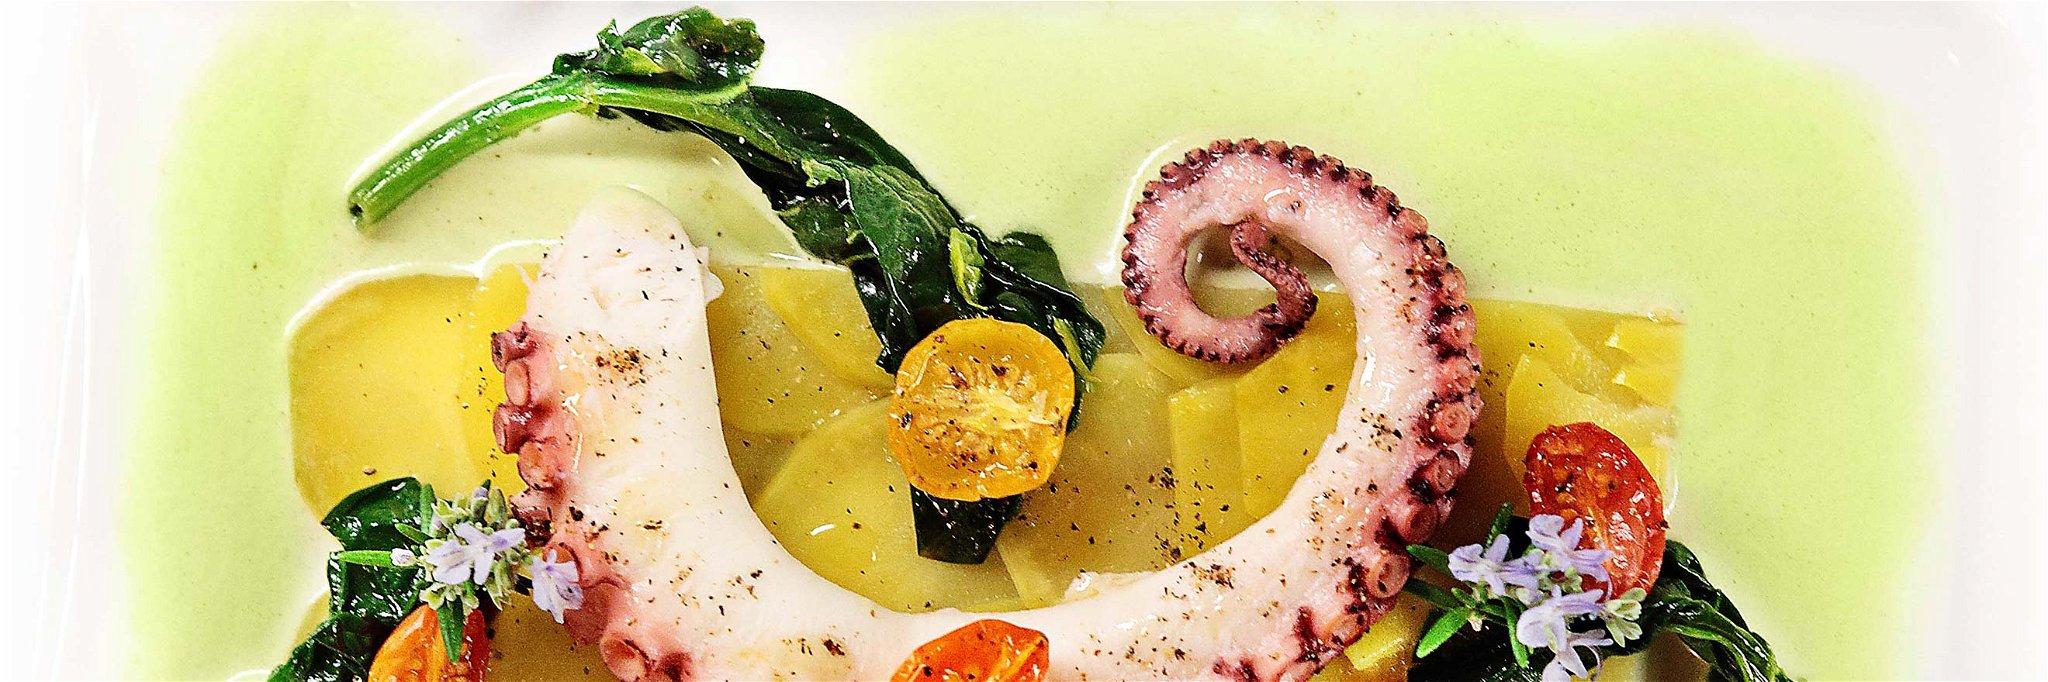 Oktopus mit Gemüsebeilage